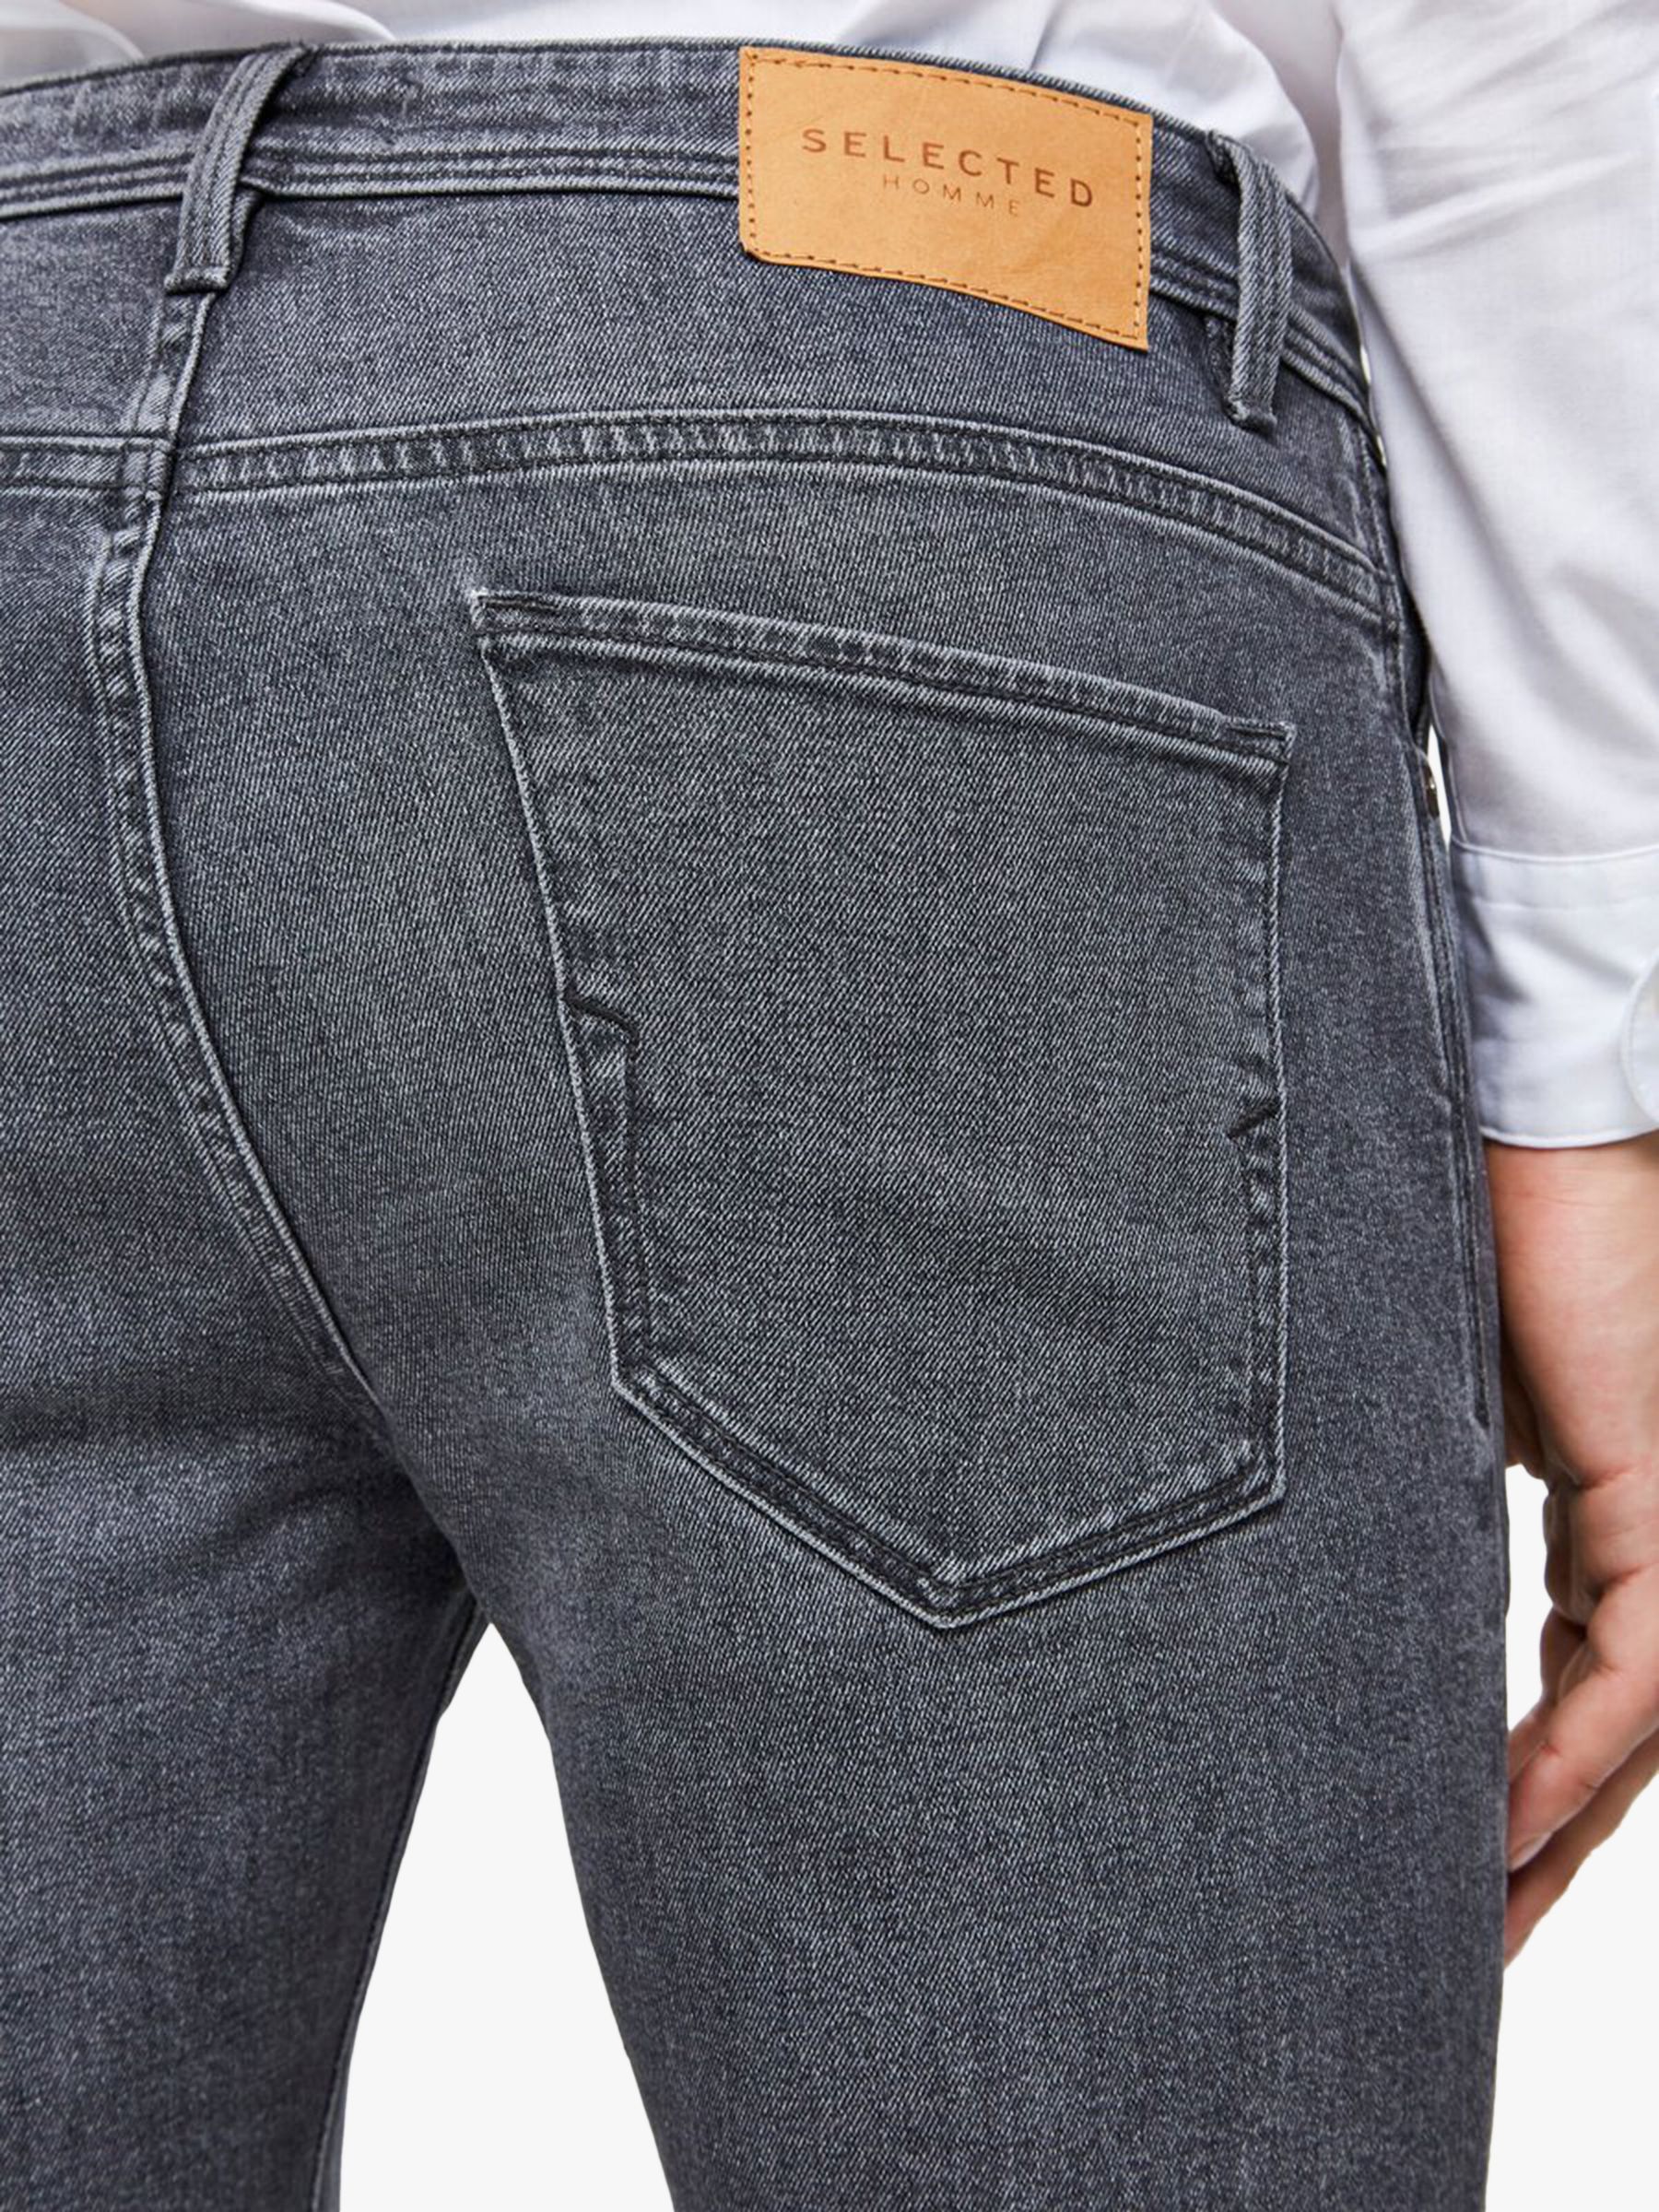 SELECTED HOMME Leon Fit Denim Jeans at John Lewis & Partners